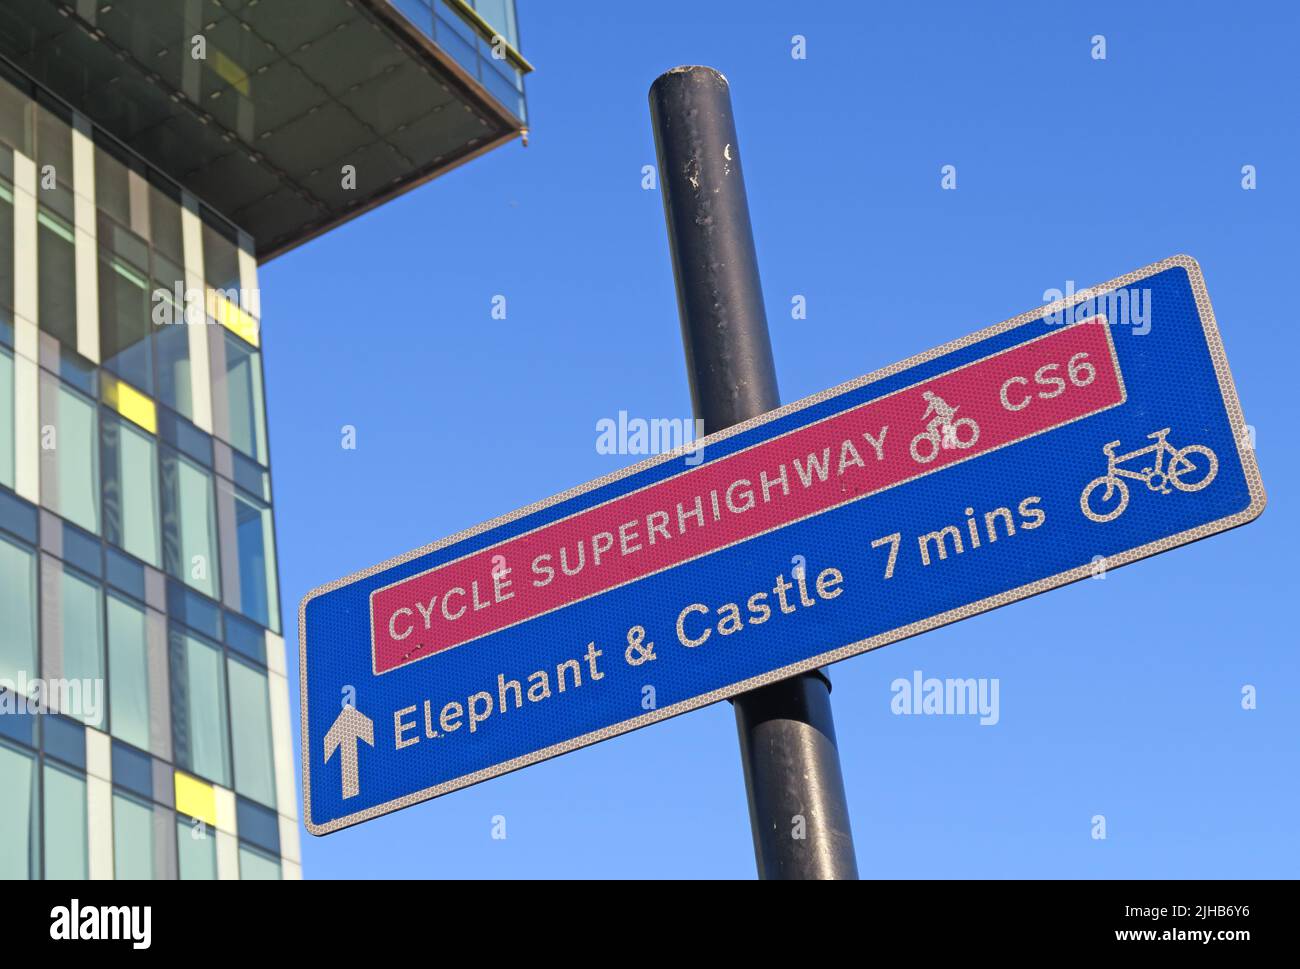 London Cycle SuperHighway, CS6 zum Elephant Castle, 7 min Schild, England, Großbritannien Stockfoto